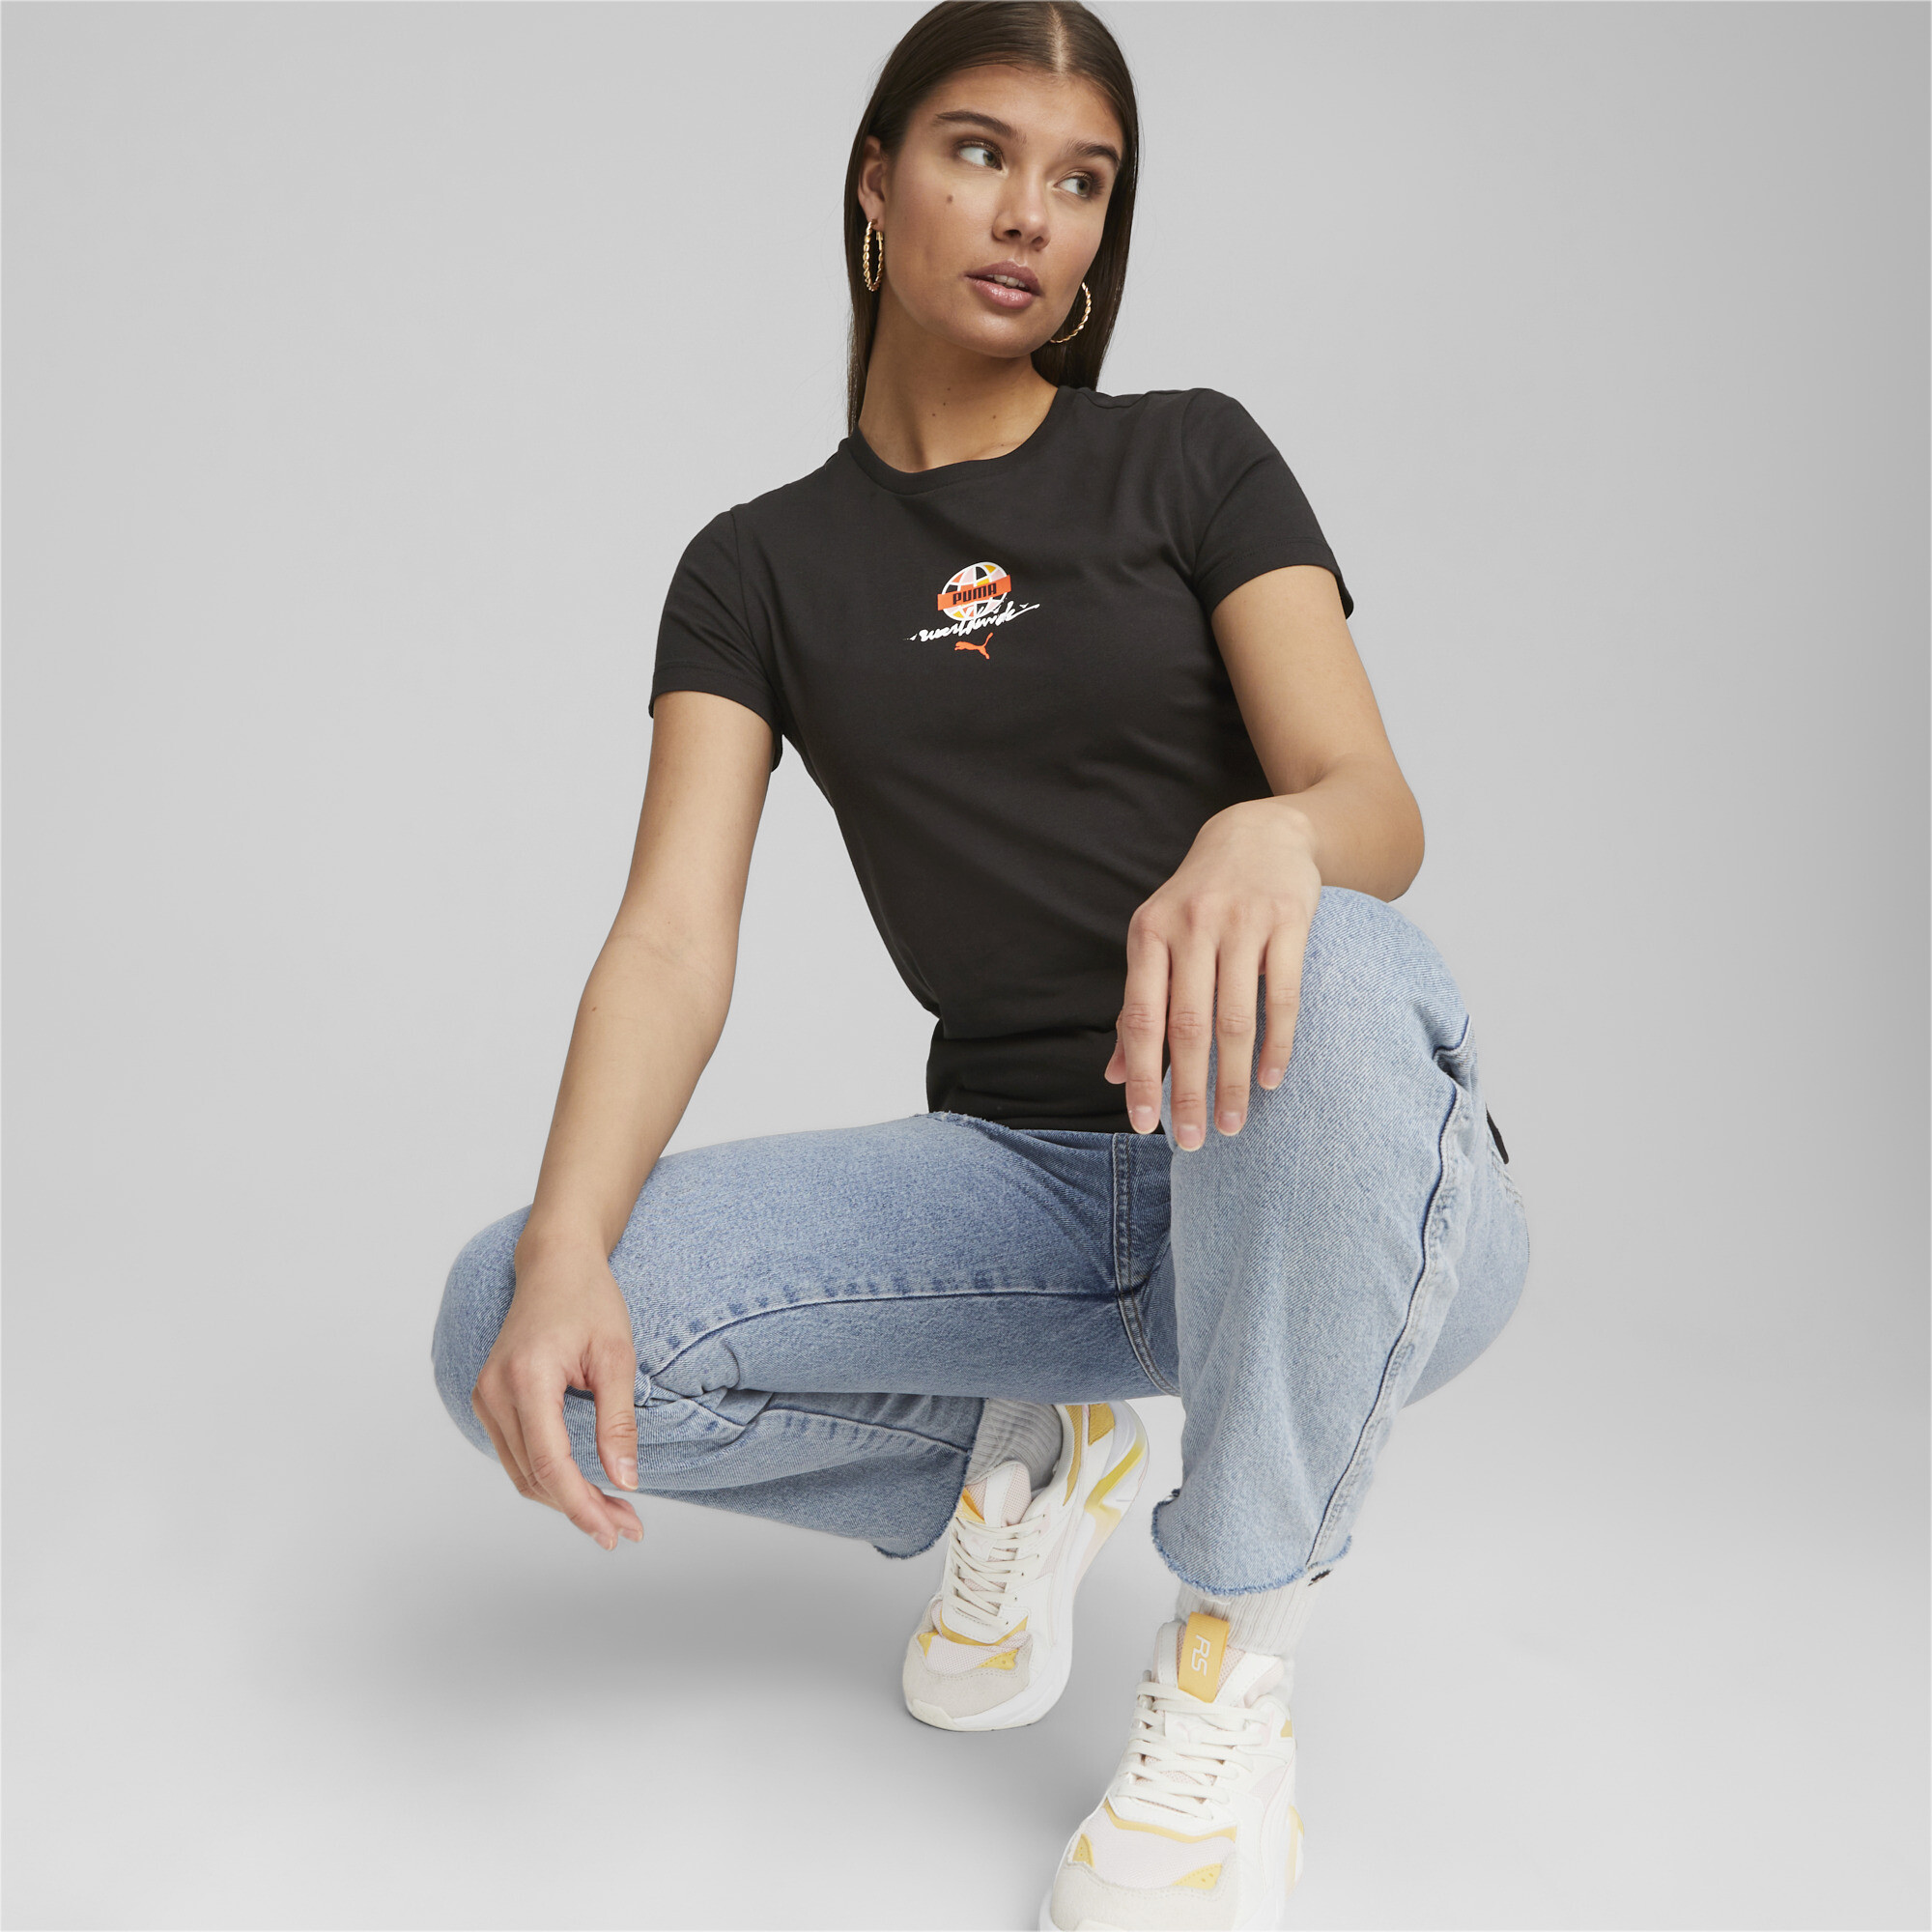 Women's Sportswear By PUMA Graphic T-Shirt In Black, Size XS